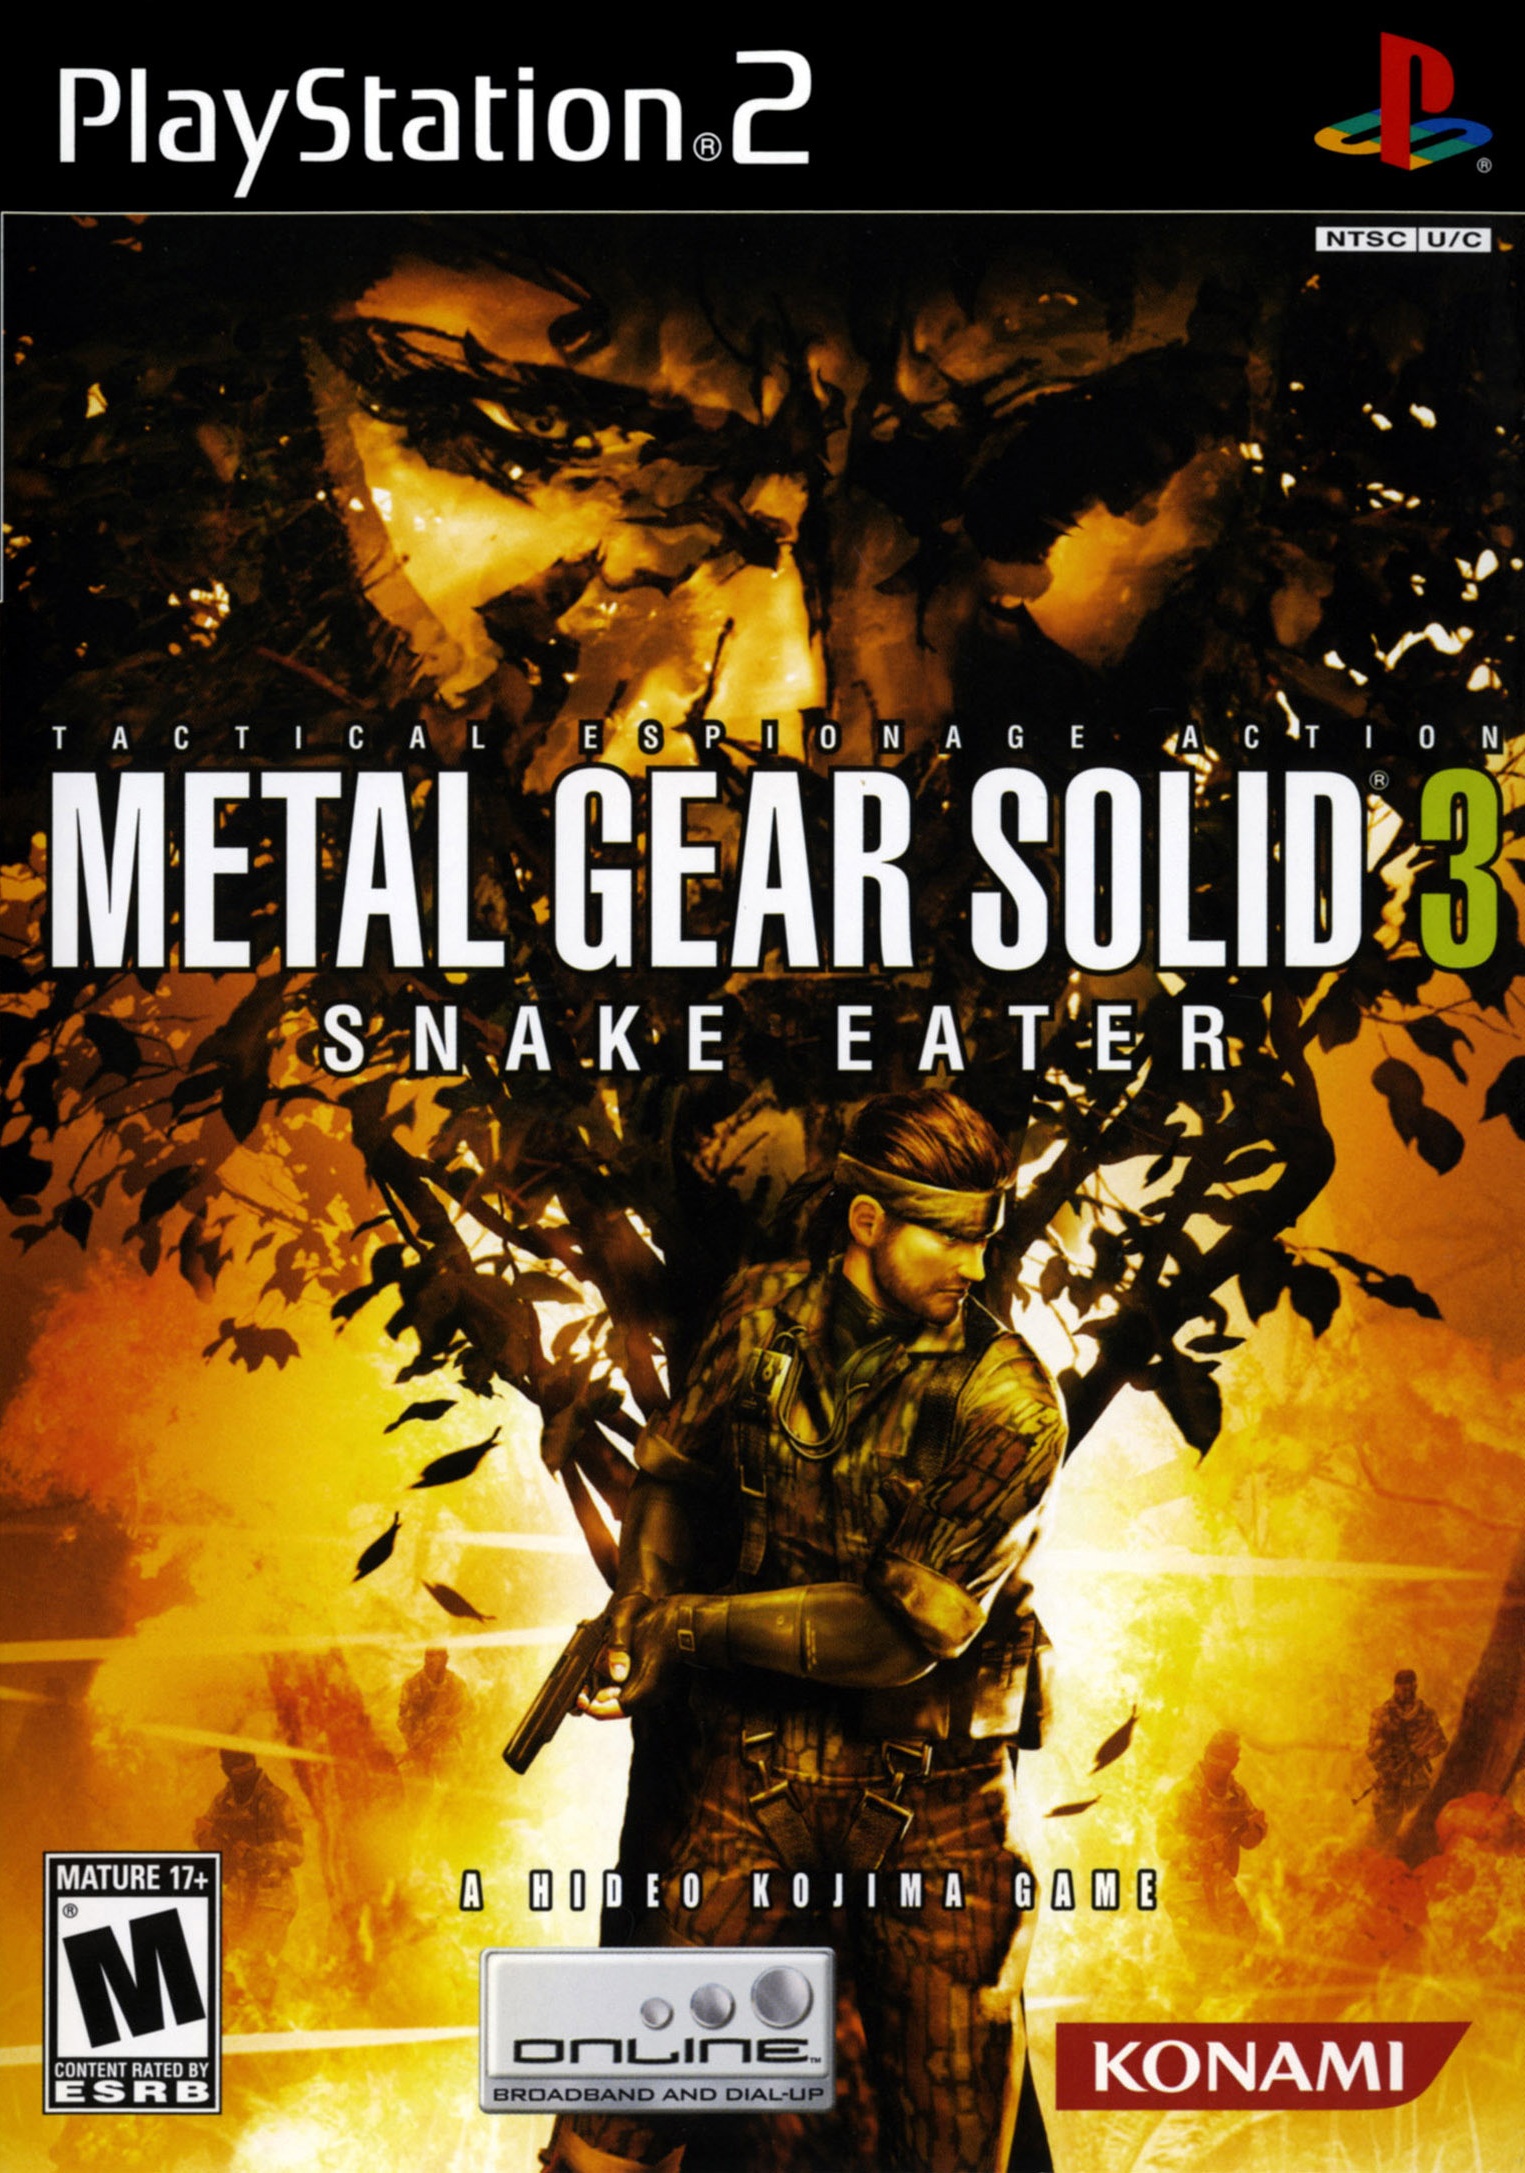 Metal Gear Solid 3 Snake Eater Details LaunchBox Games Database